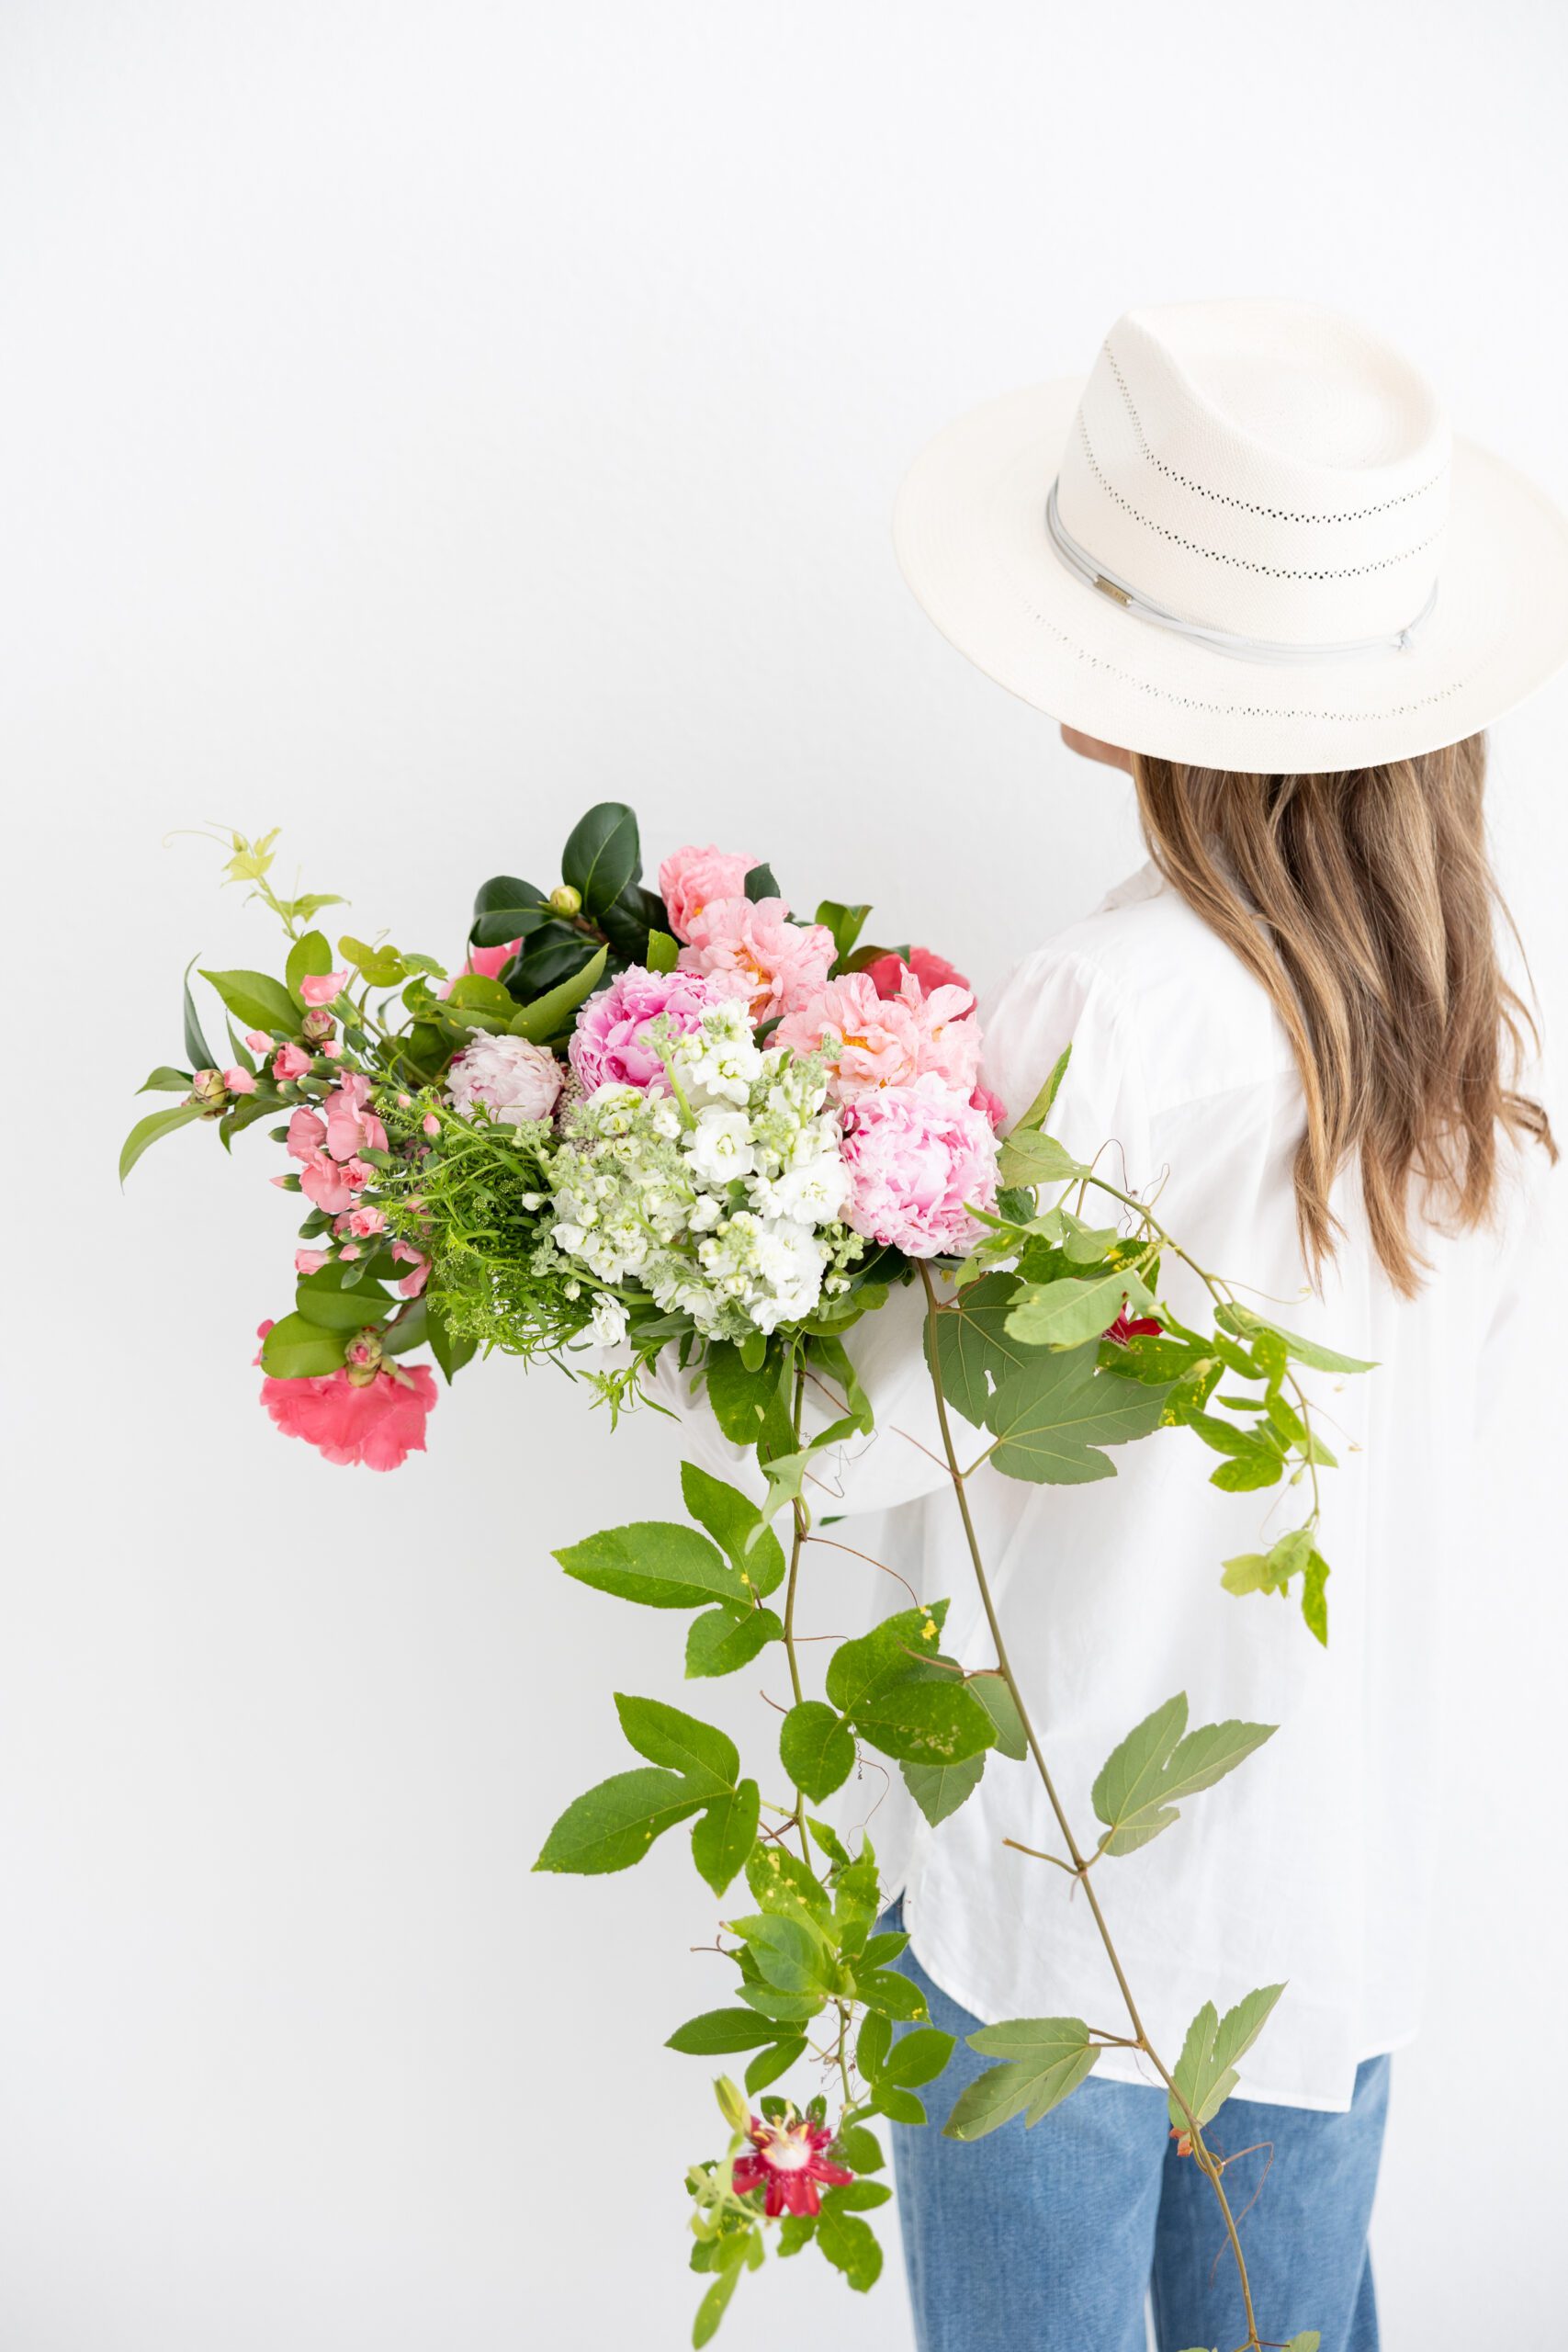 Orlando Florist and floral designer brand photo session